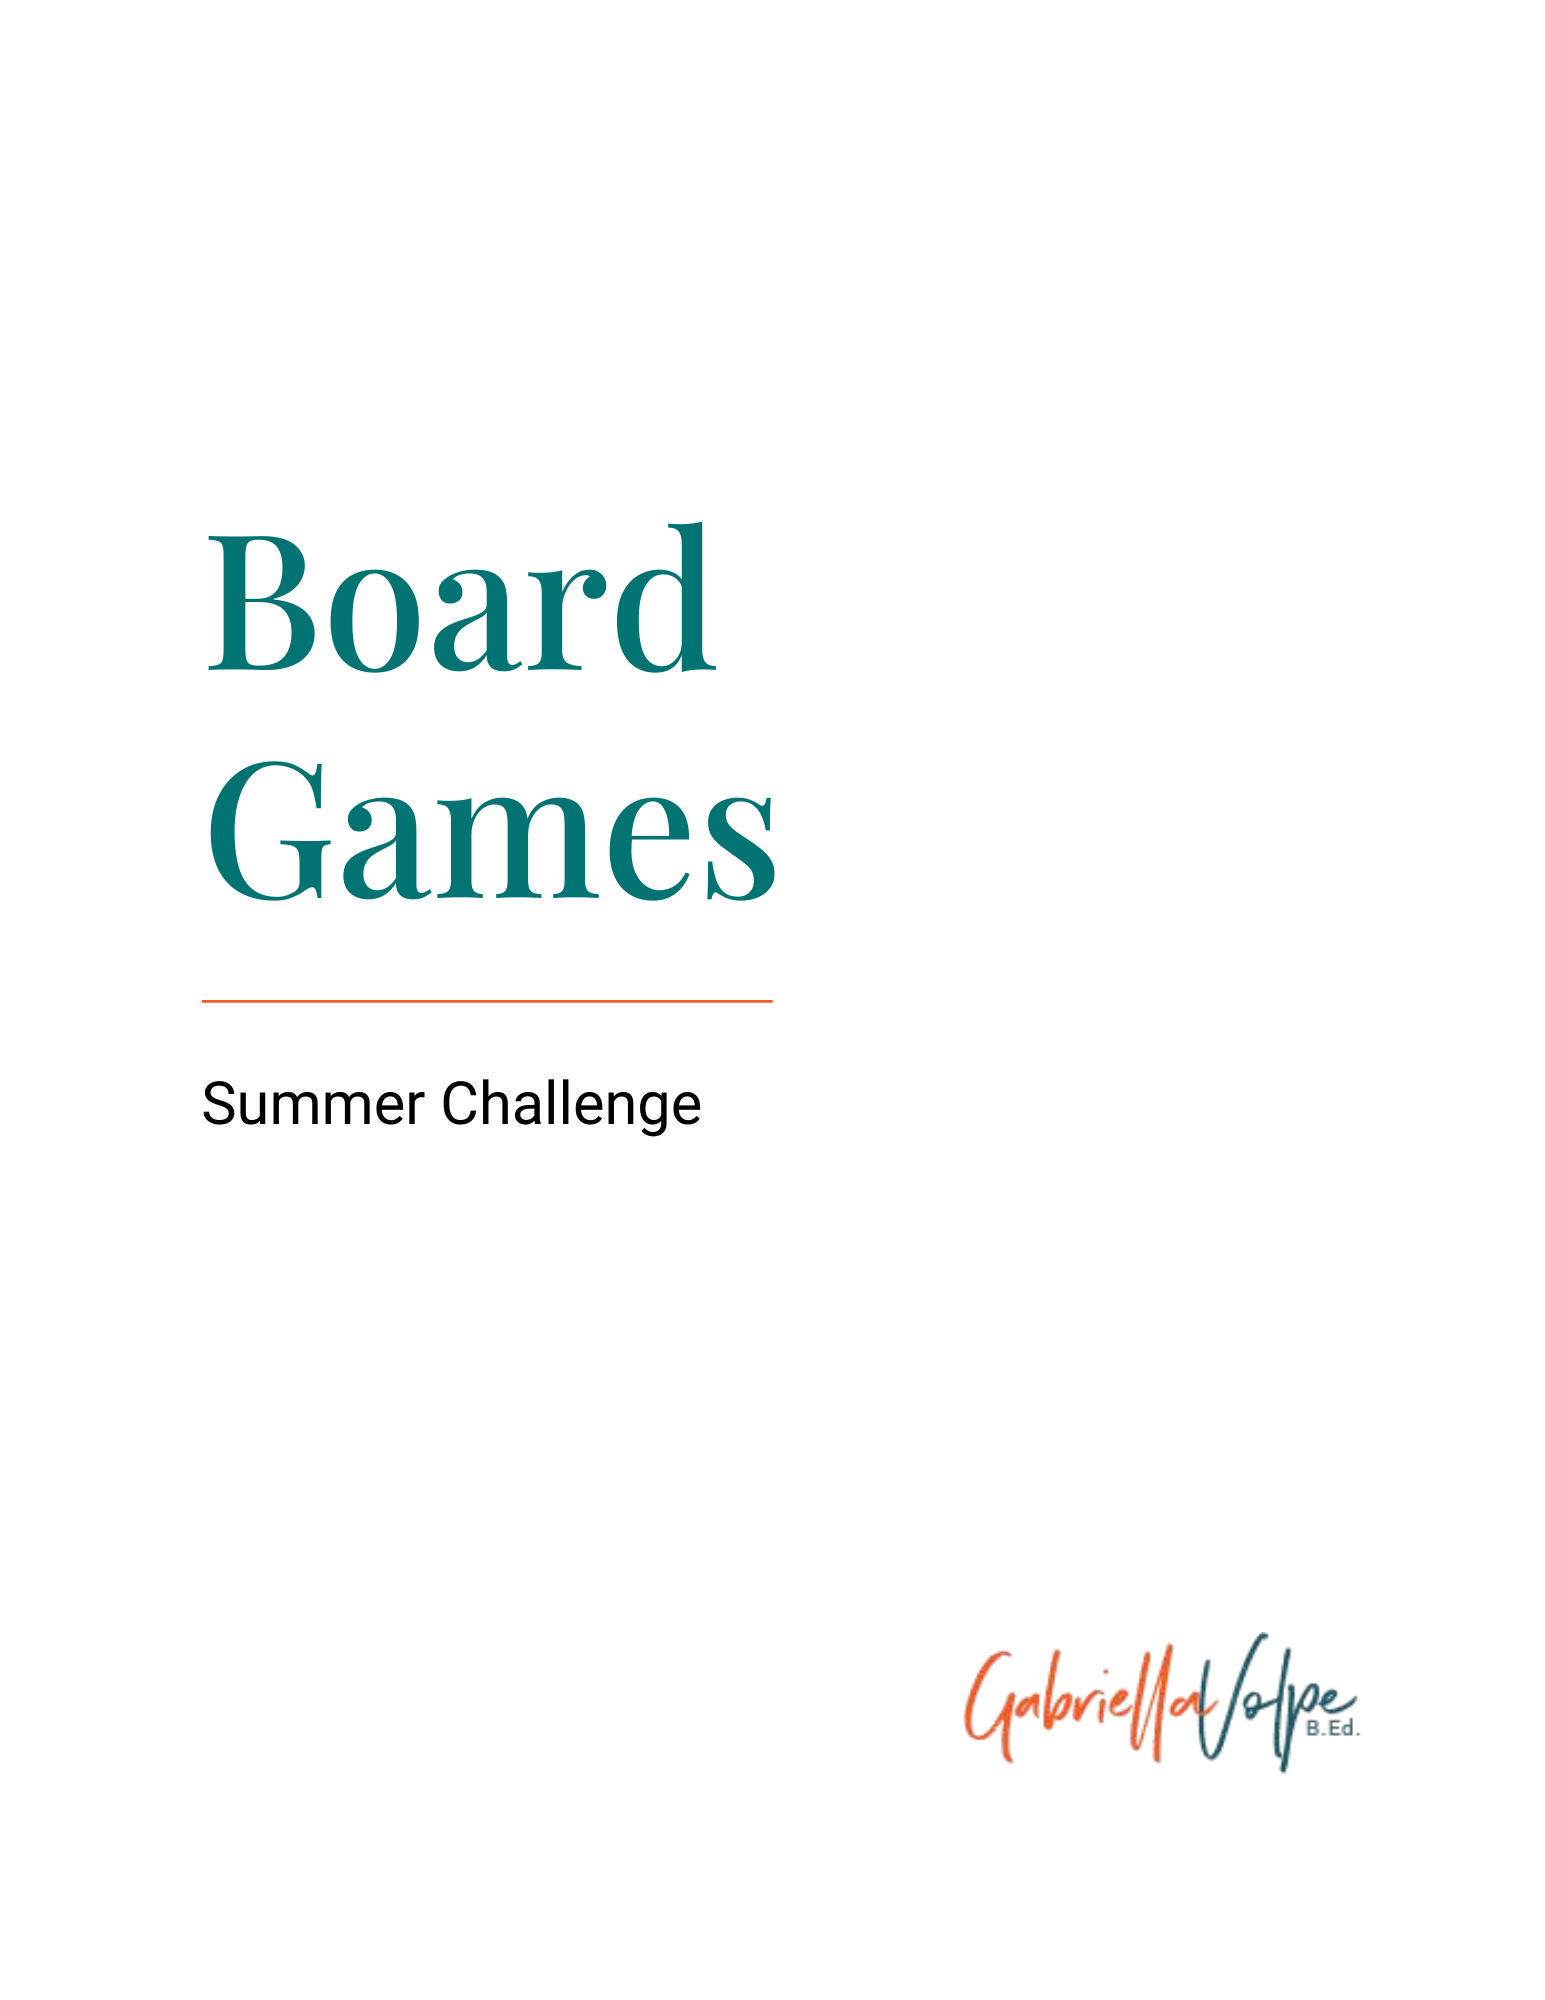 Board Games Summer Challenge